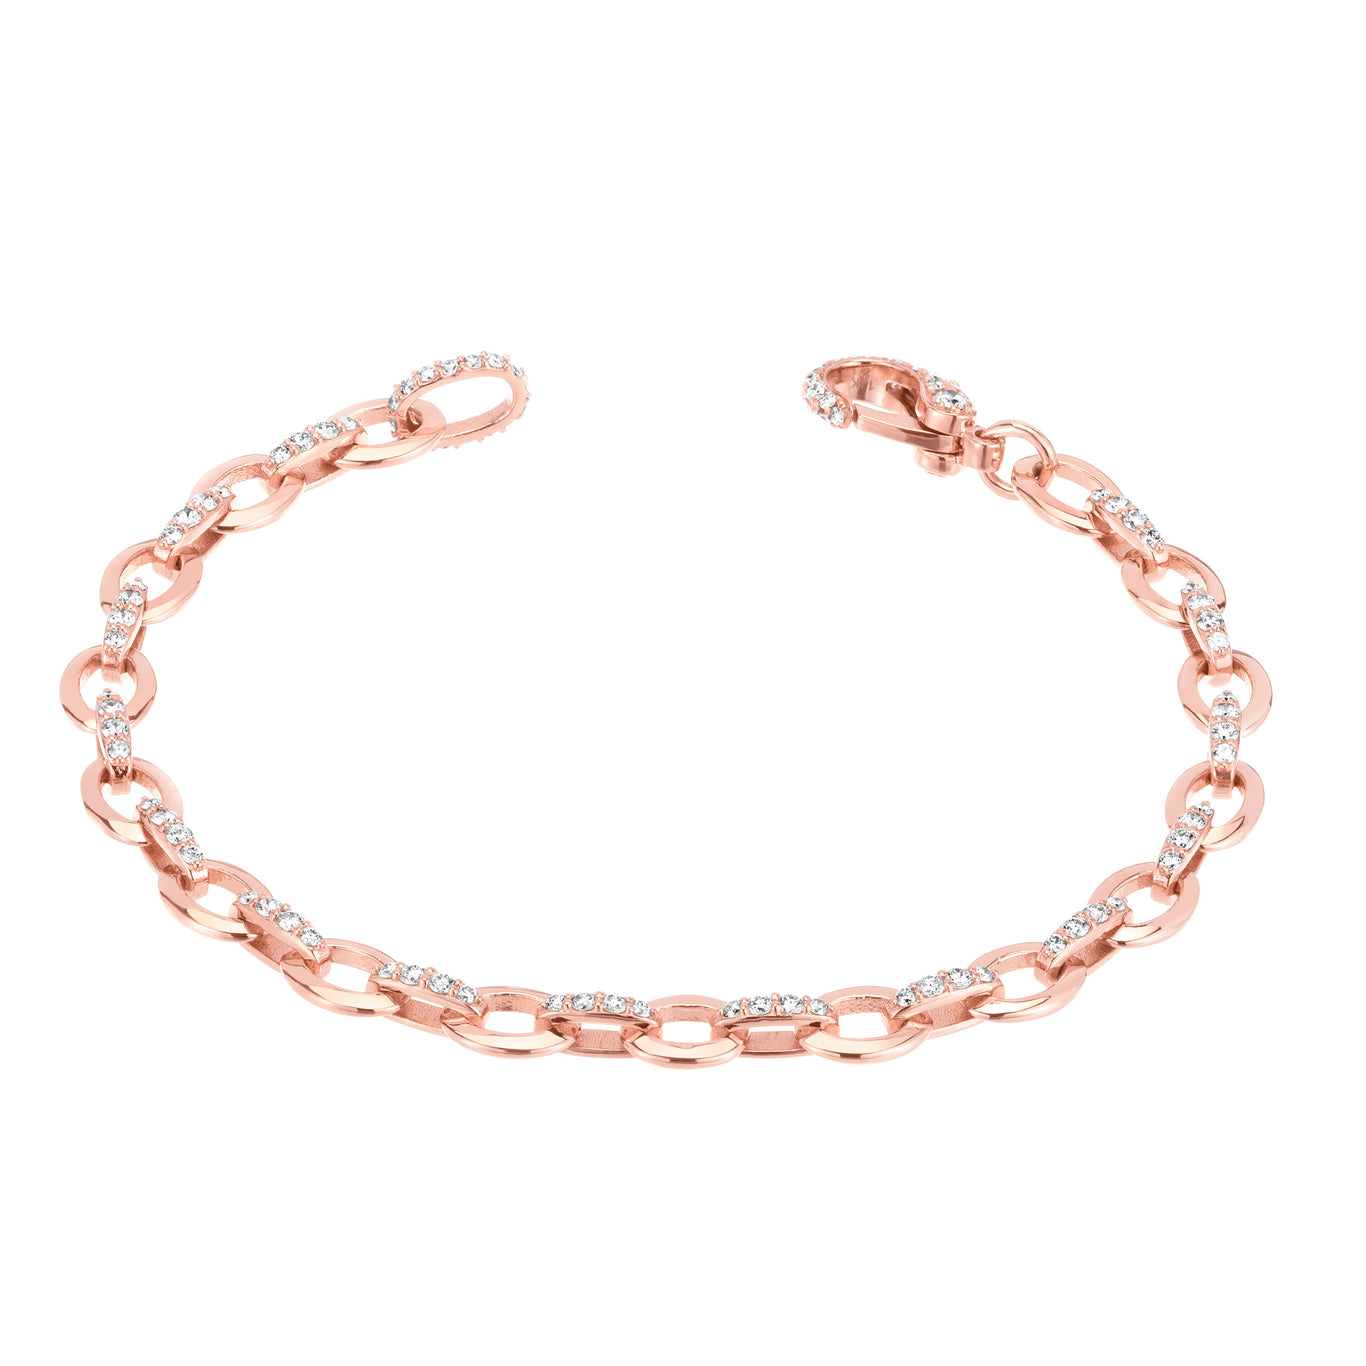 Catherine Oval Links Chain Bracelet Gold